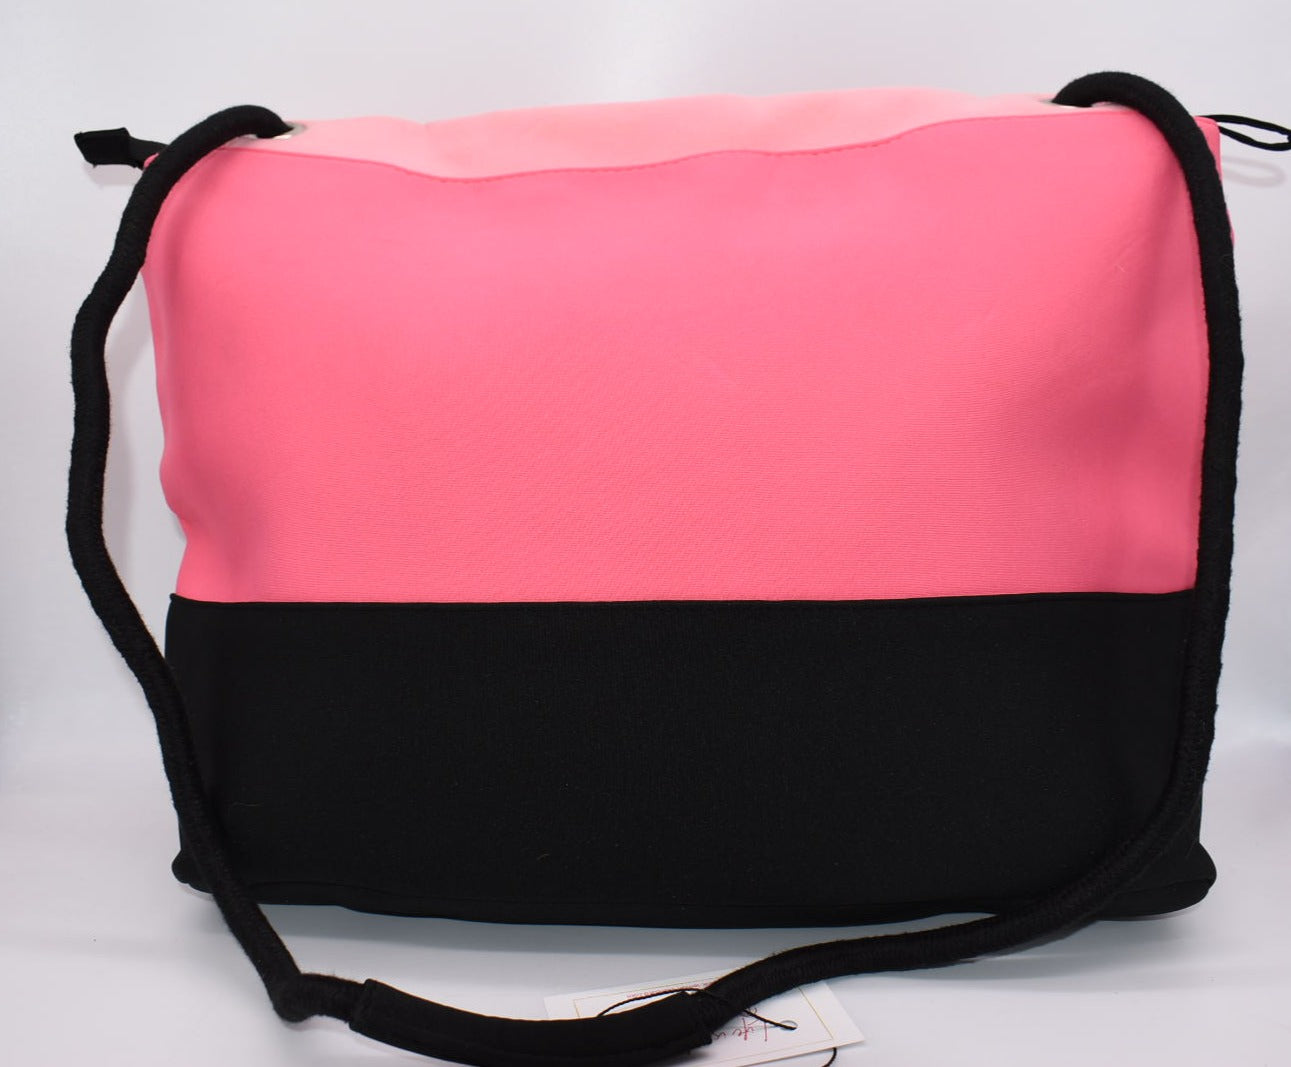 Victoria Secret Neoprene Insulated Cooler Tote Bag